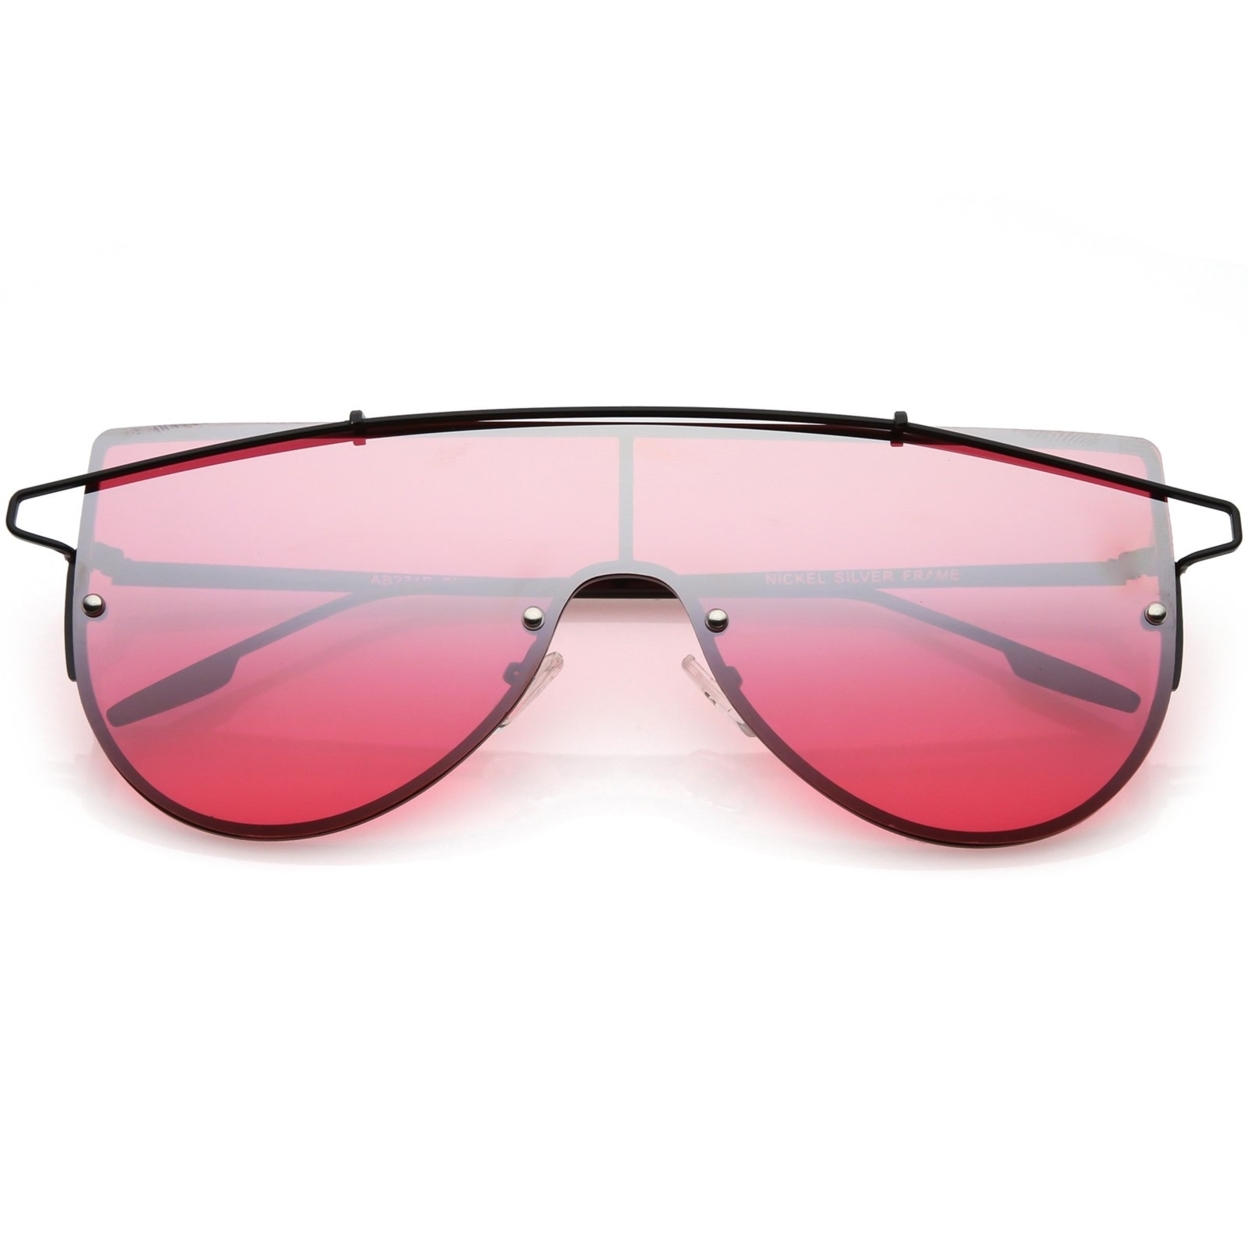 Futuristic Rimless Shield Sunglasses Metal Crossbar Colored Mono Lens 64mm - Black / Red